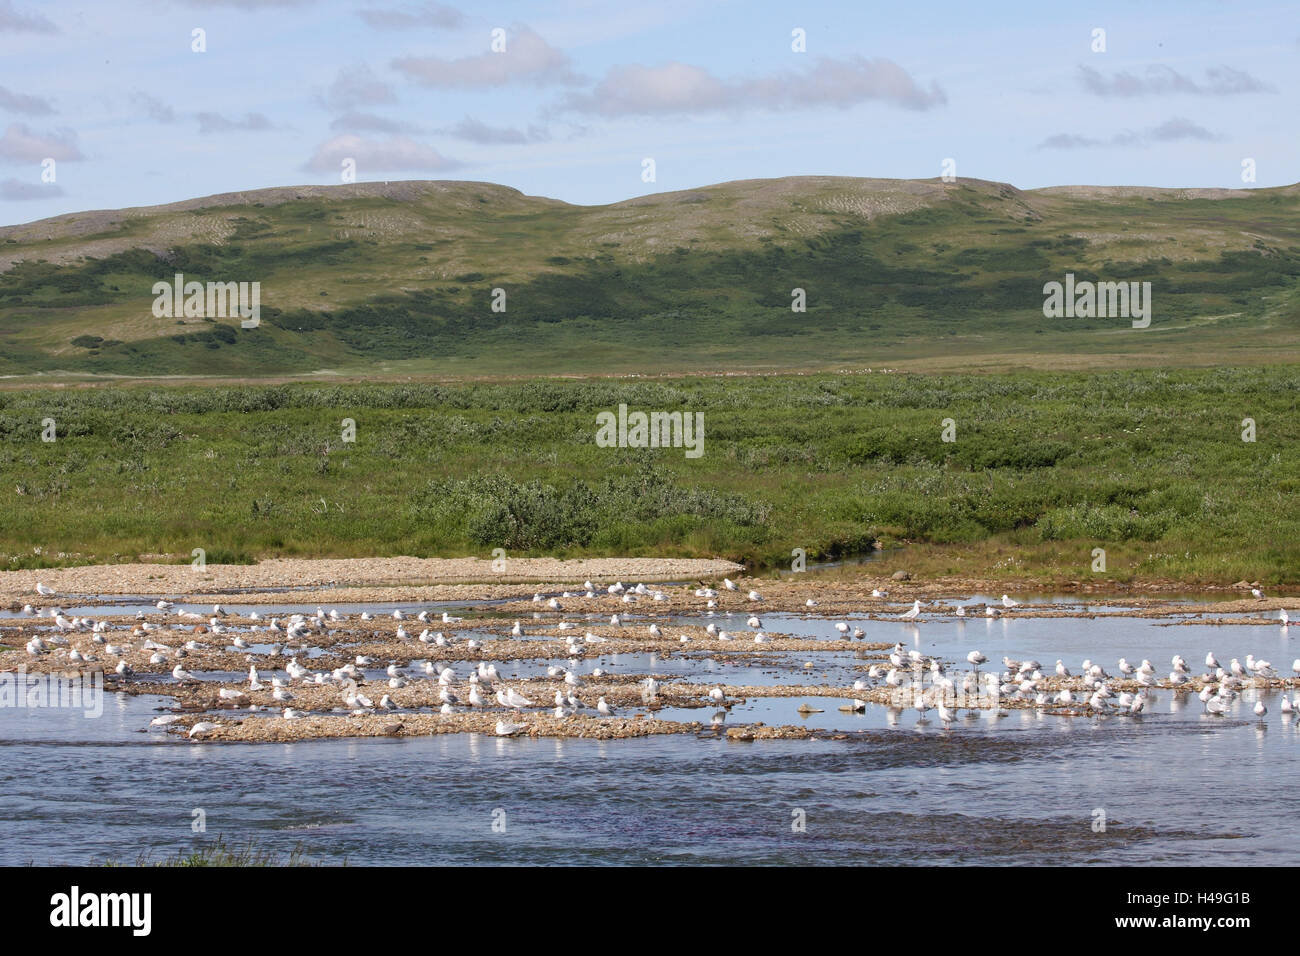 Alaska, scenery, nature, animal world, river, gulls, Stock Photo